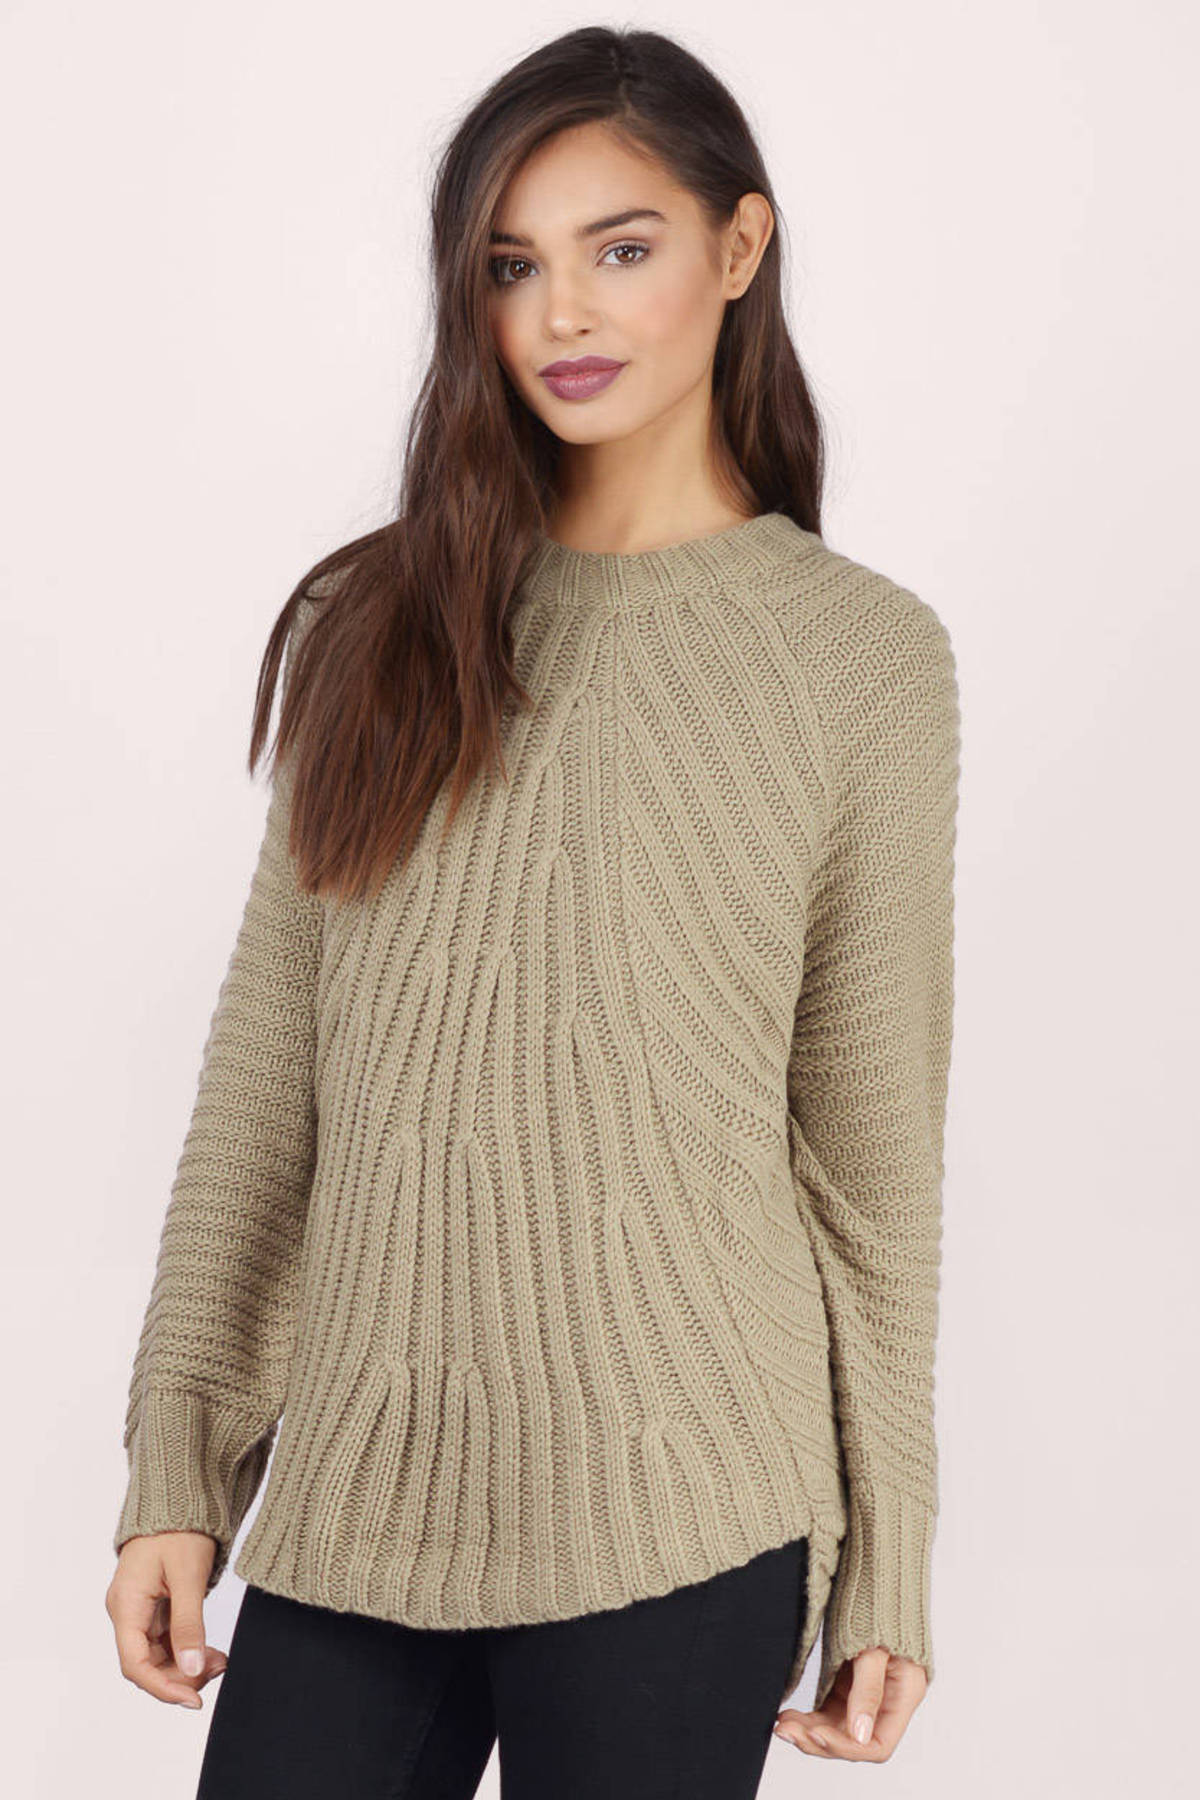 Clarissa Good Knit Sweater in Taupe - $19 | Tobi US